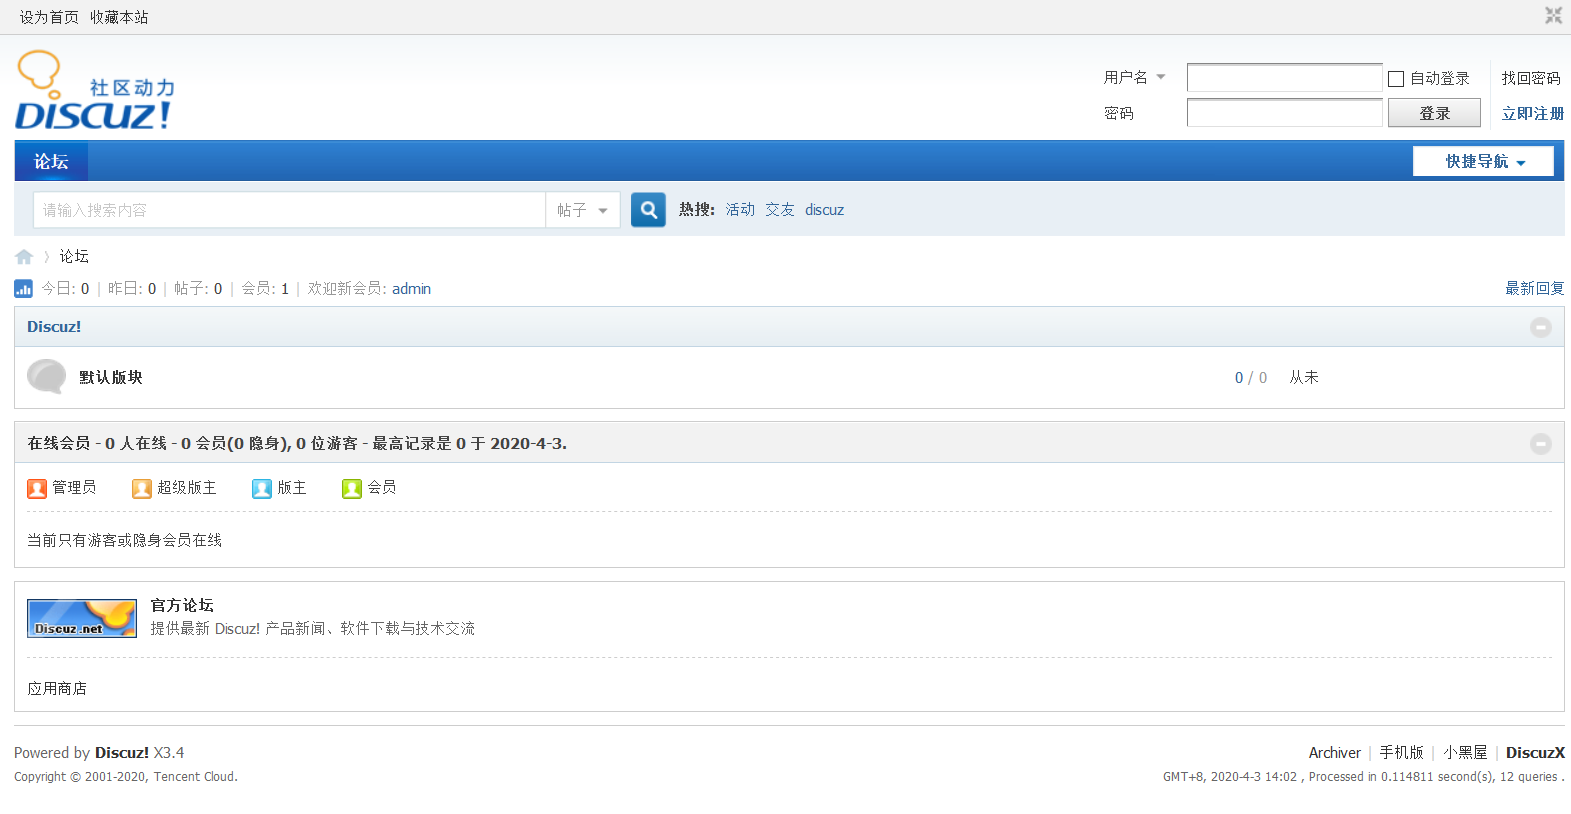 Forums forum php info. Boyxzeed2 similar. Boyxzeed Discuz. Форум php. Boyxzeed Chinese.